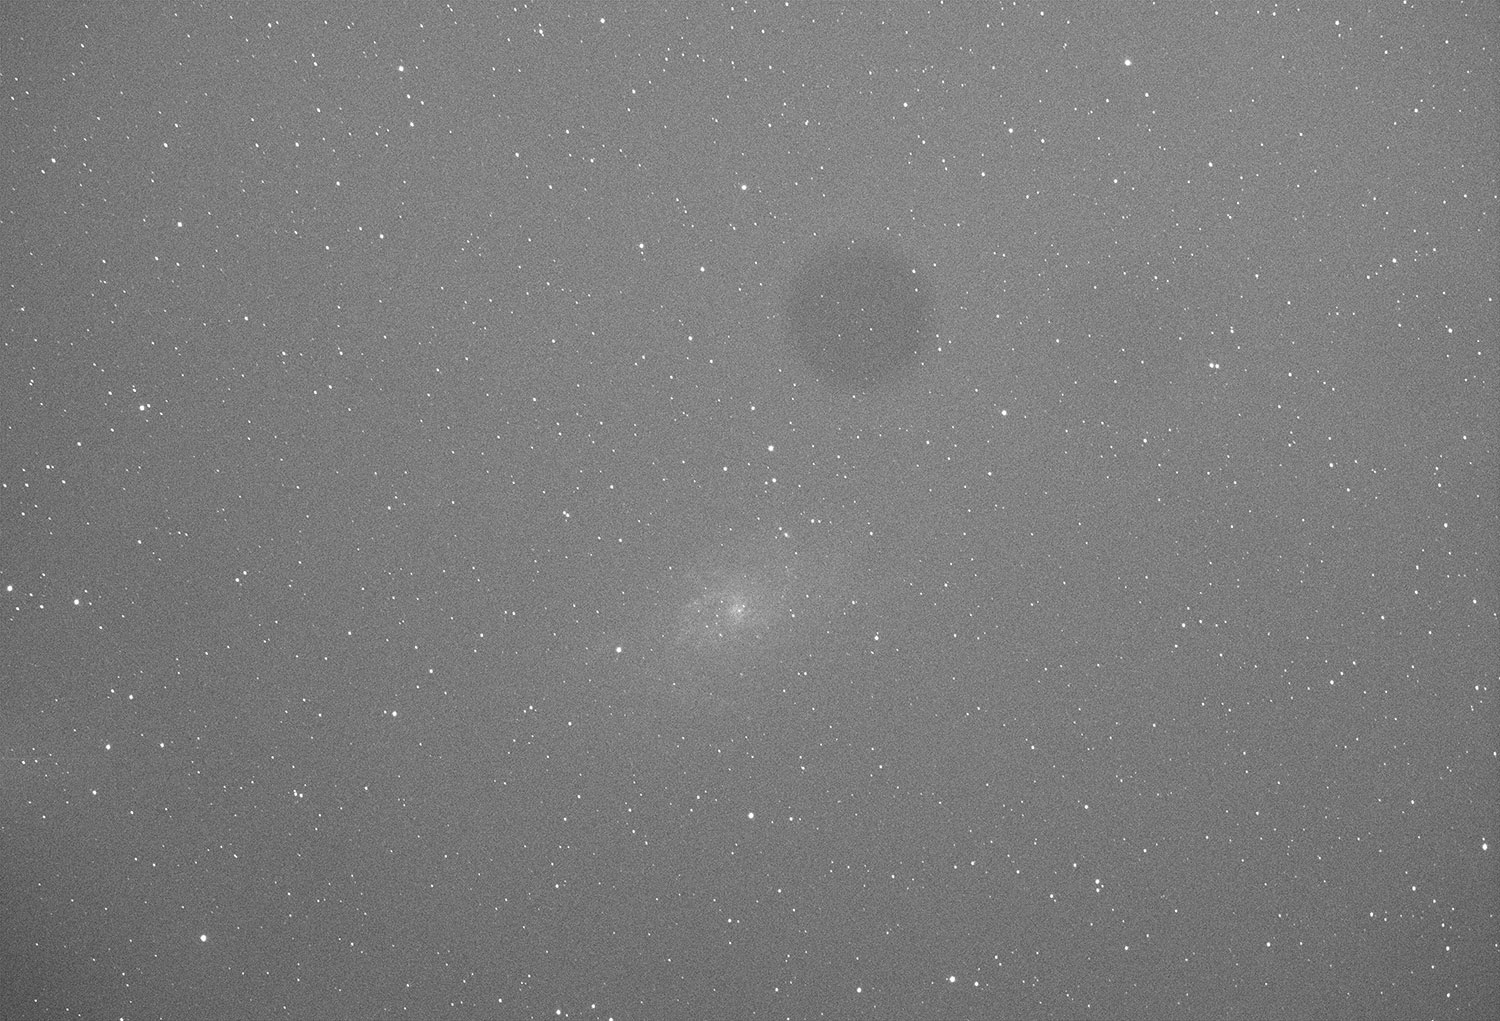 M33 single 90 second exposure before debayer